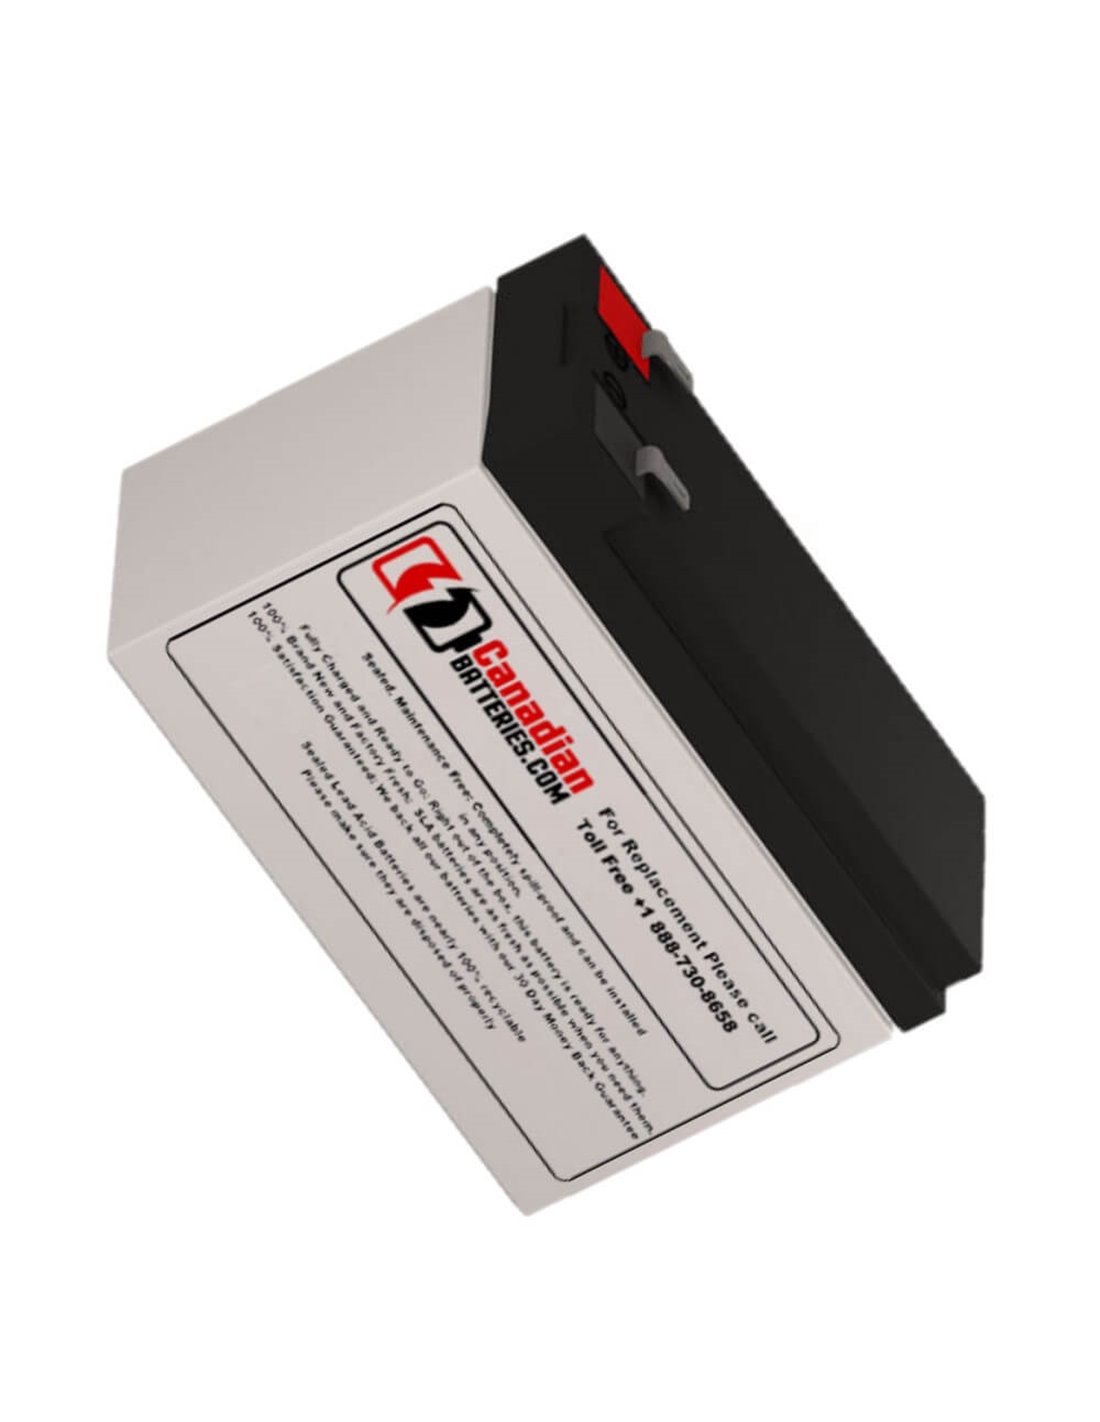 Battery for Powercom Black Knight Pro Bnt-800ap UPS, 1 x 12V, 7Ah - 84Wh